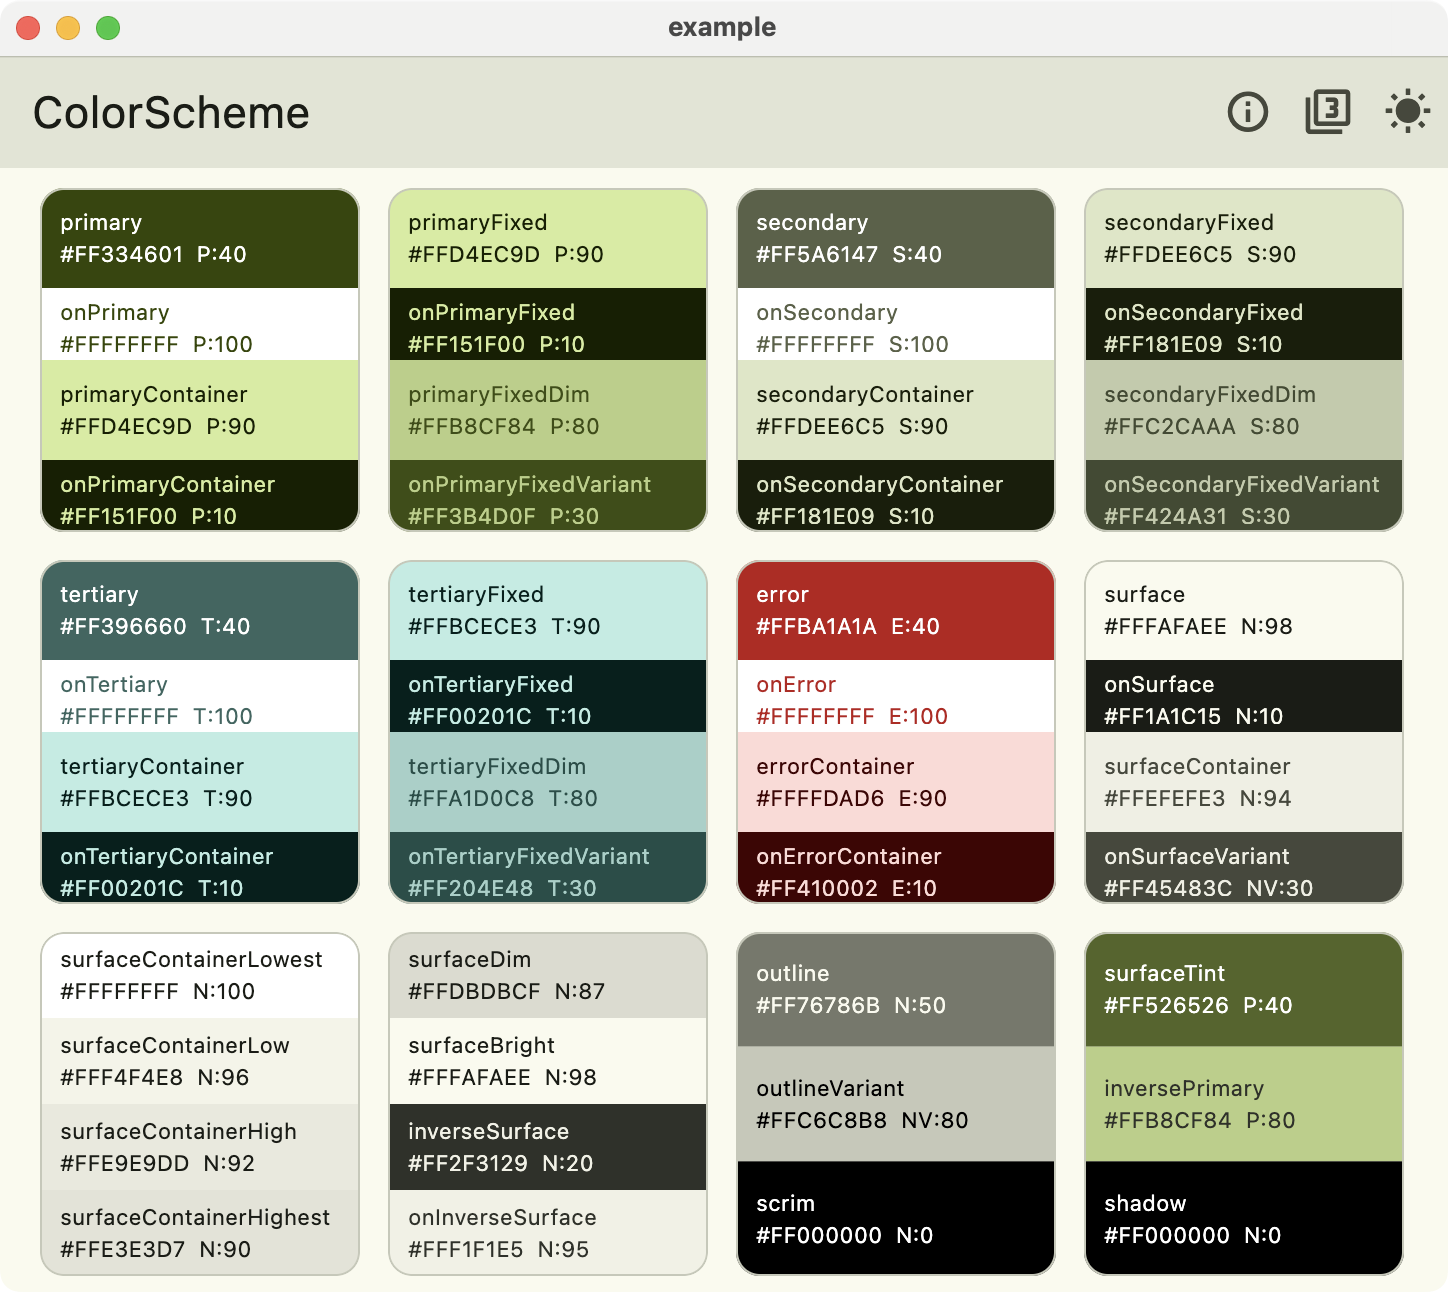 ColorScheme.fromSeed light using avocado token